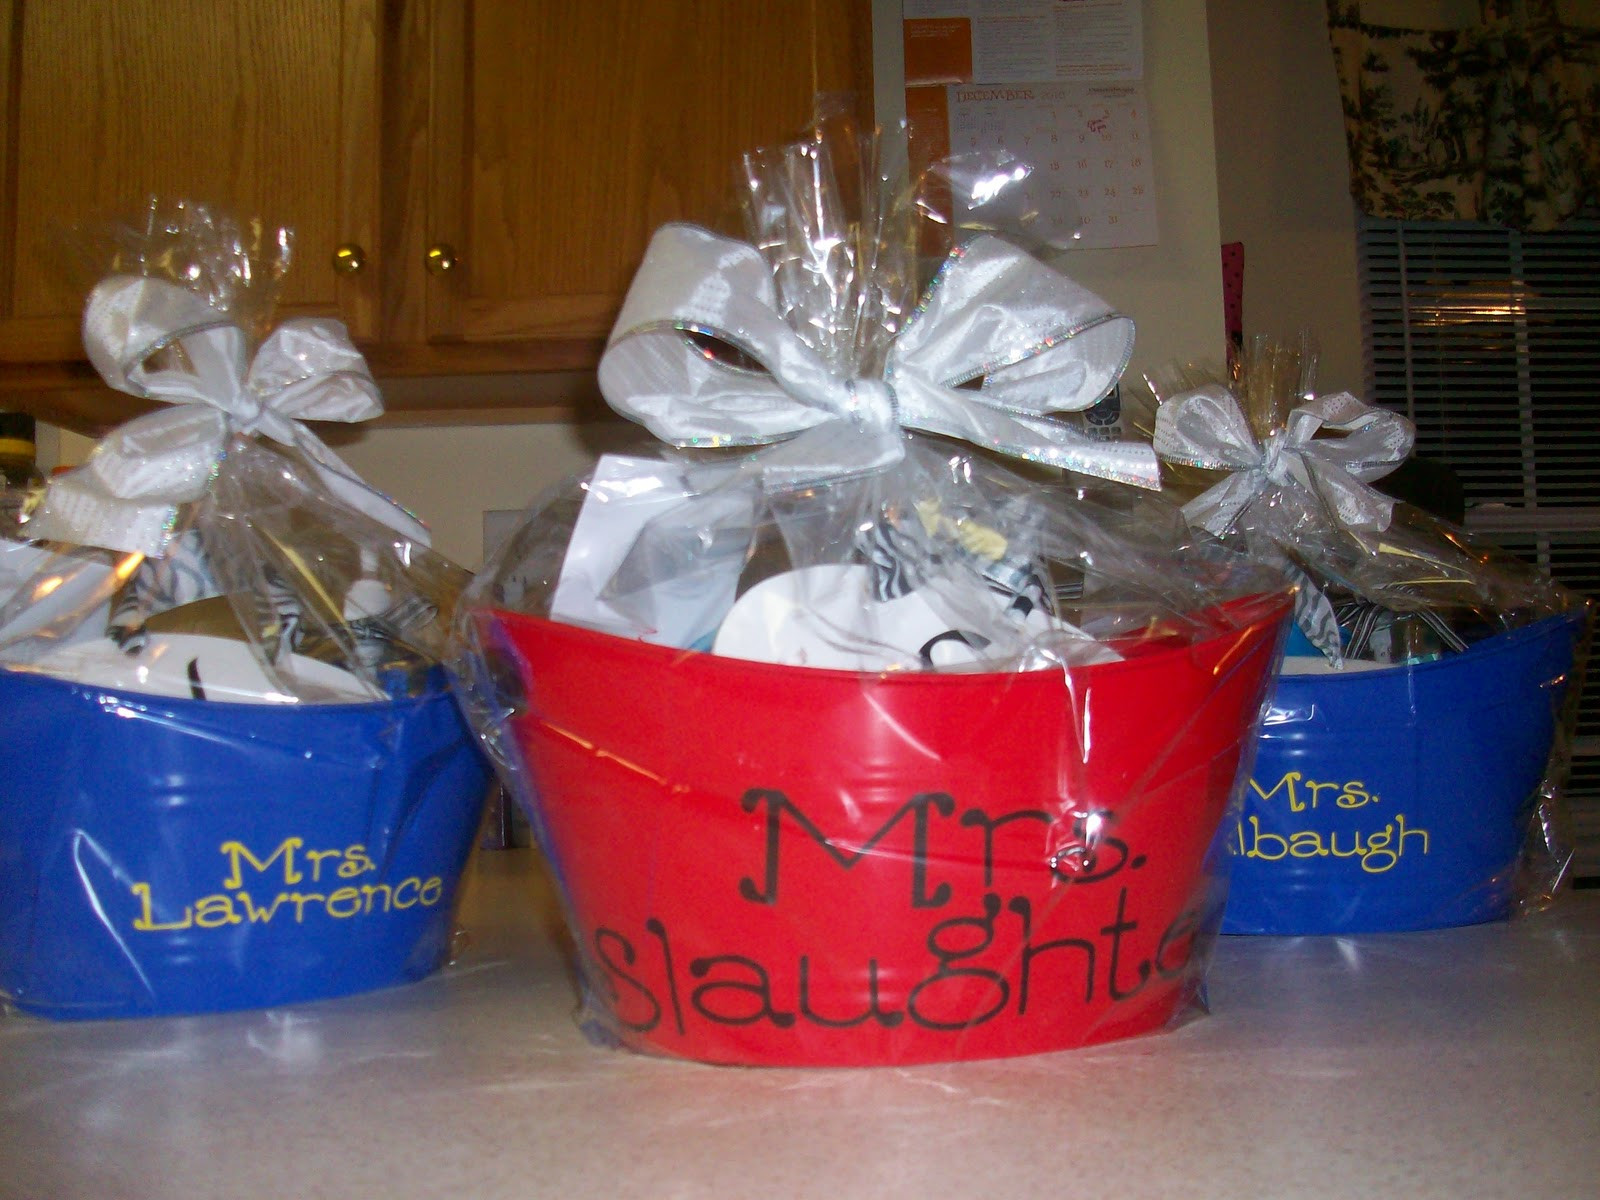 Best ideas about DIY Christmas Gift For Teacher
. Save or Pin Hamilton Hams Homemade Christmas Gifts for Teachers Now.